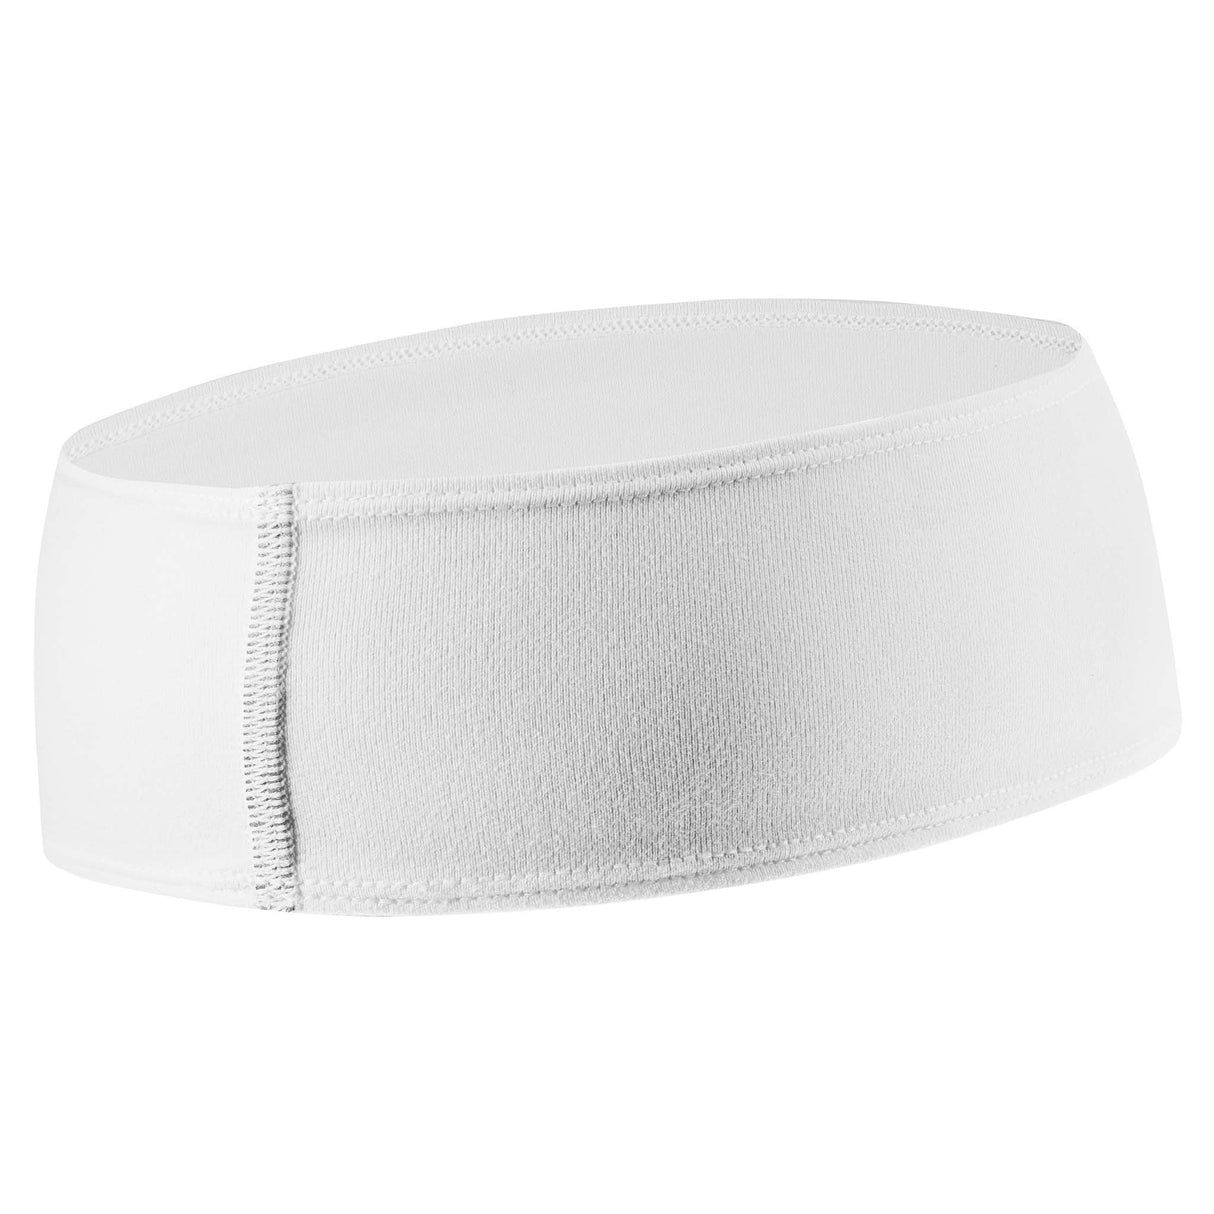 Nike Dri-Fit Swoosh Headband 2.0 bandeau sport unisexe blanc argent dos